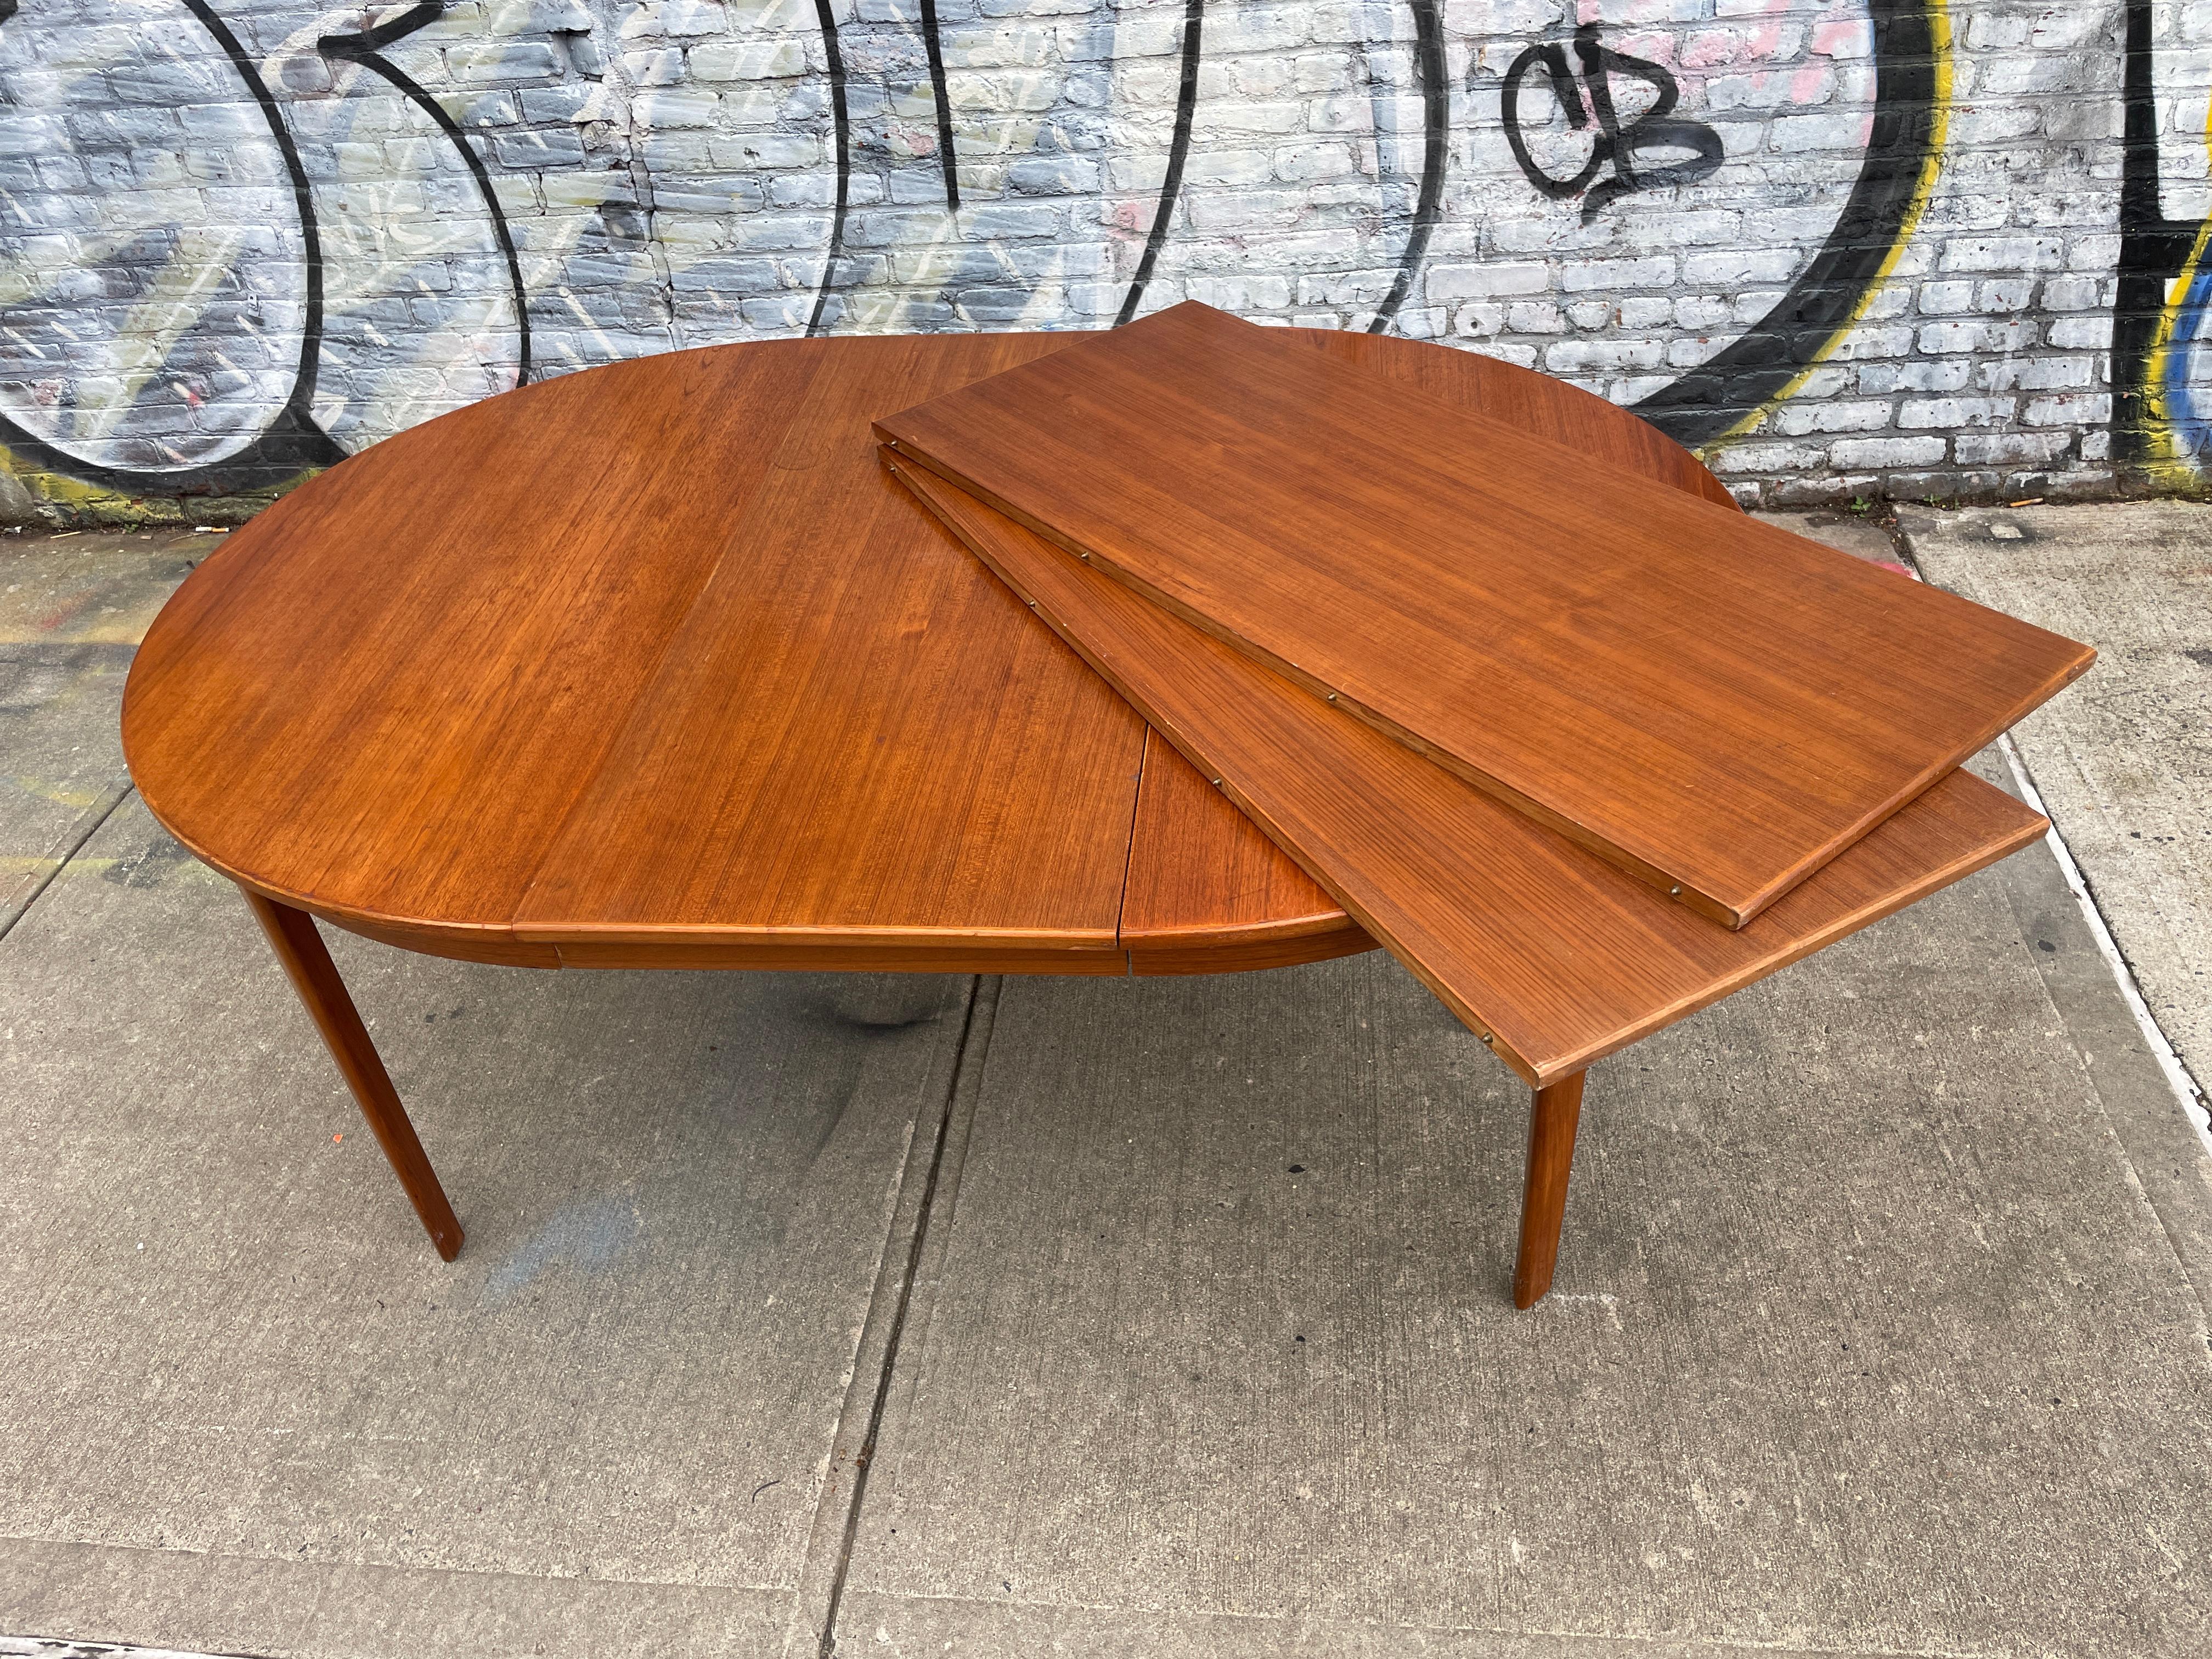 Woodwork Midcentury Round Light Teak Danish Modern Extension Dining Table 3 Leaves